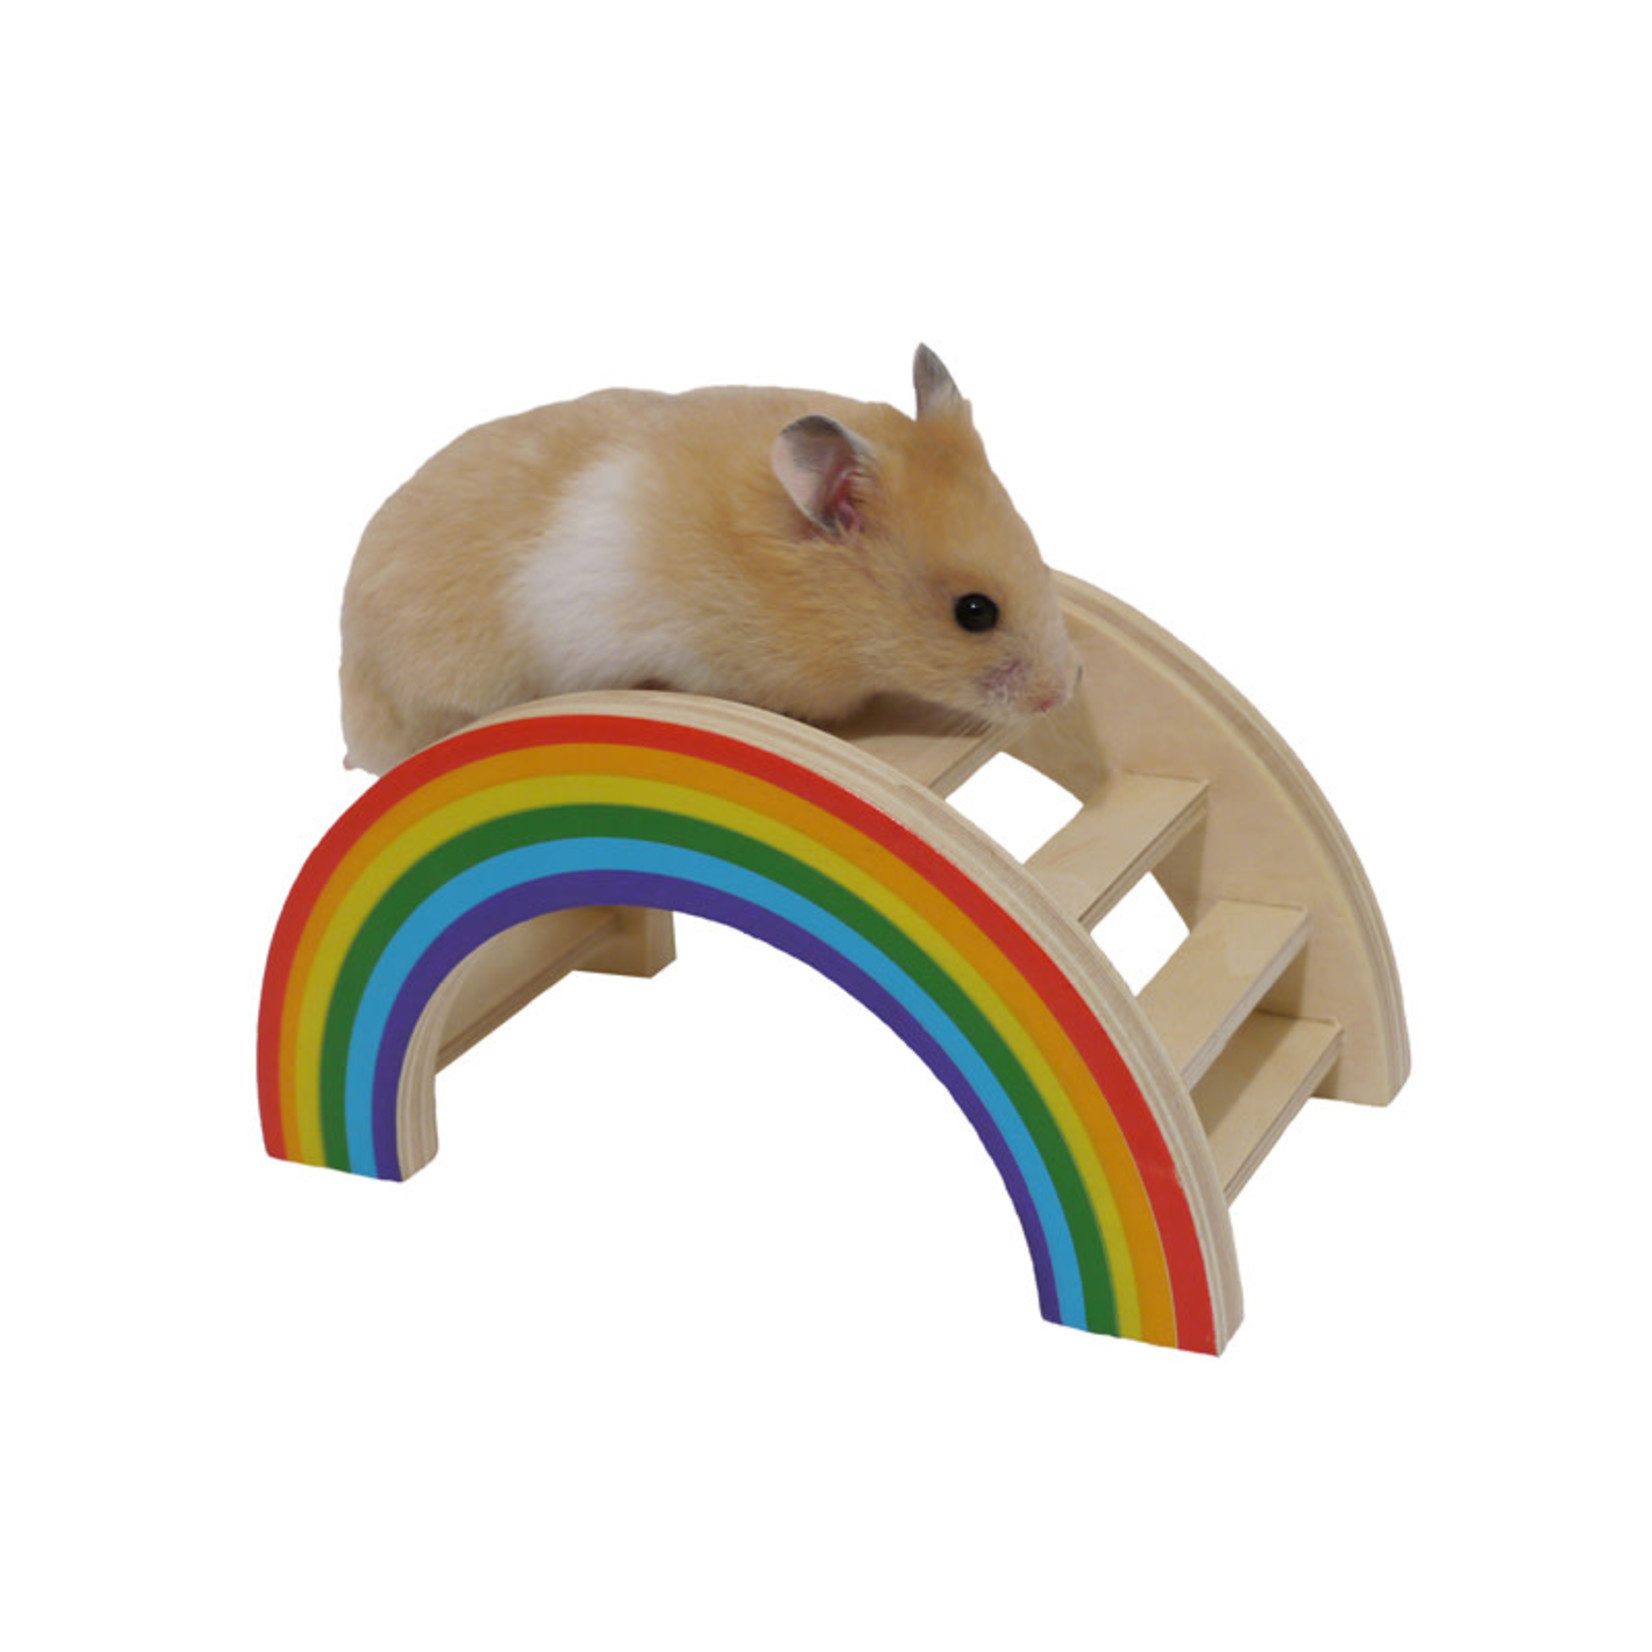 Rosewood Rainbow Play Bridge Small Animal Toy